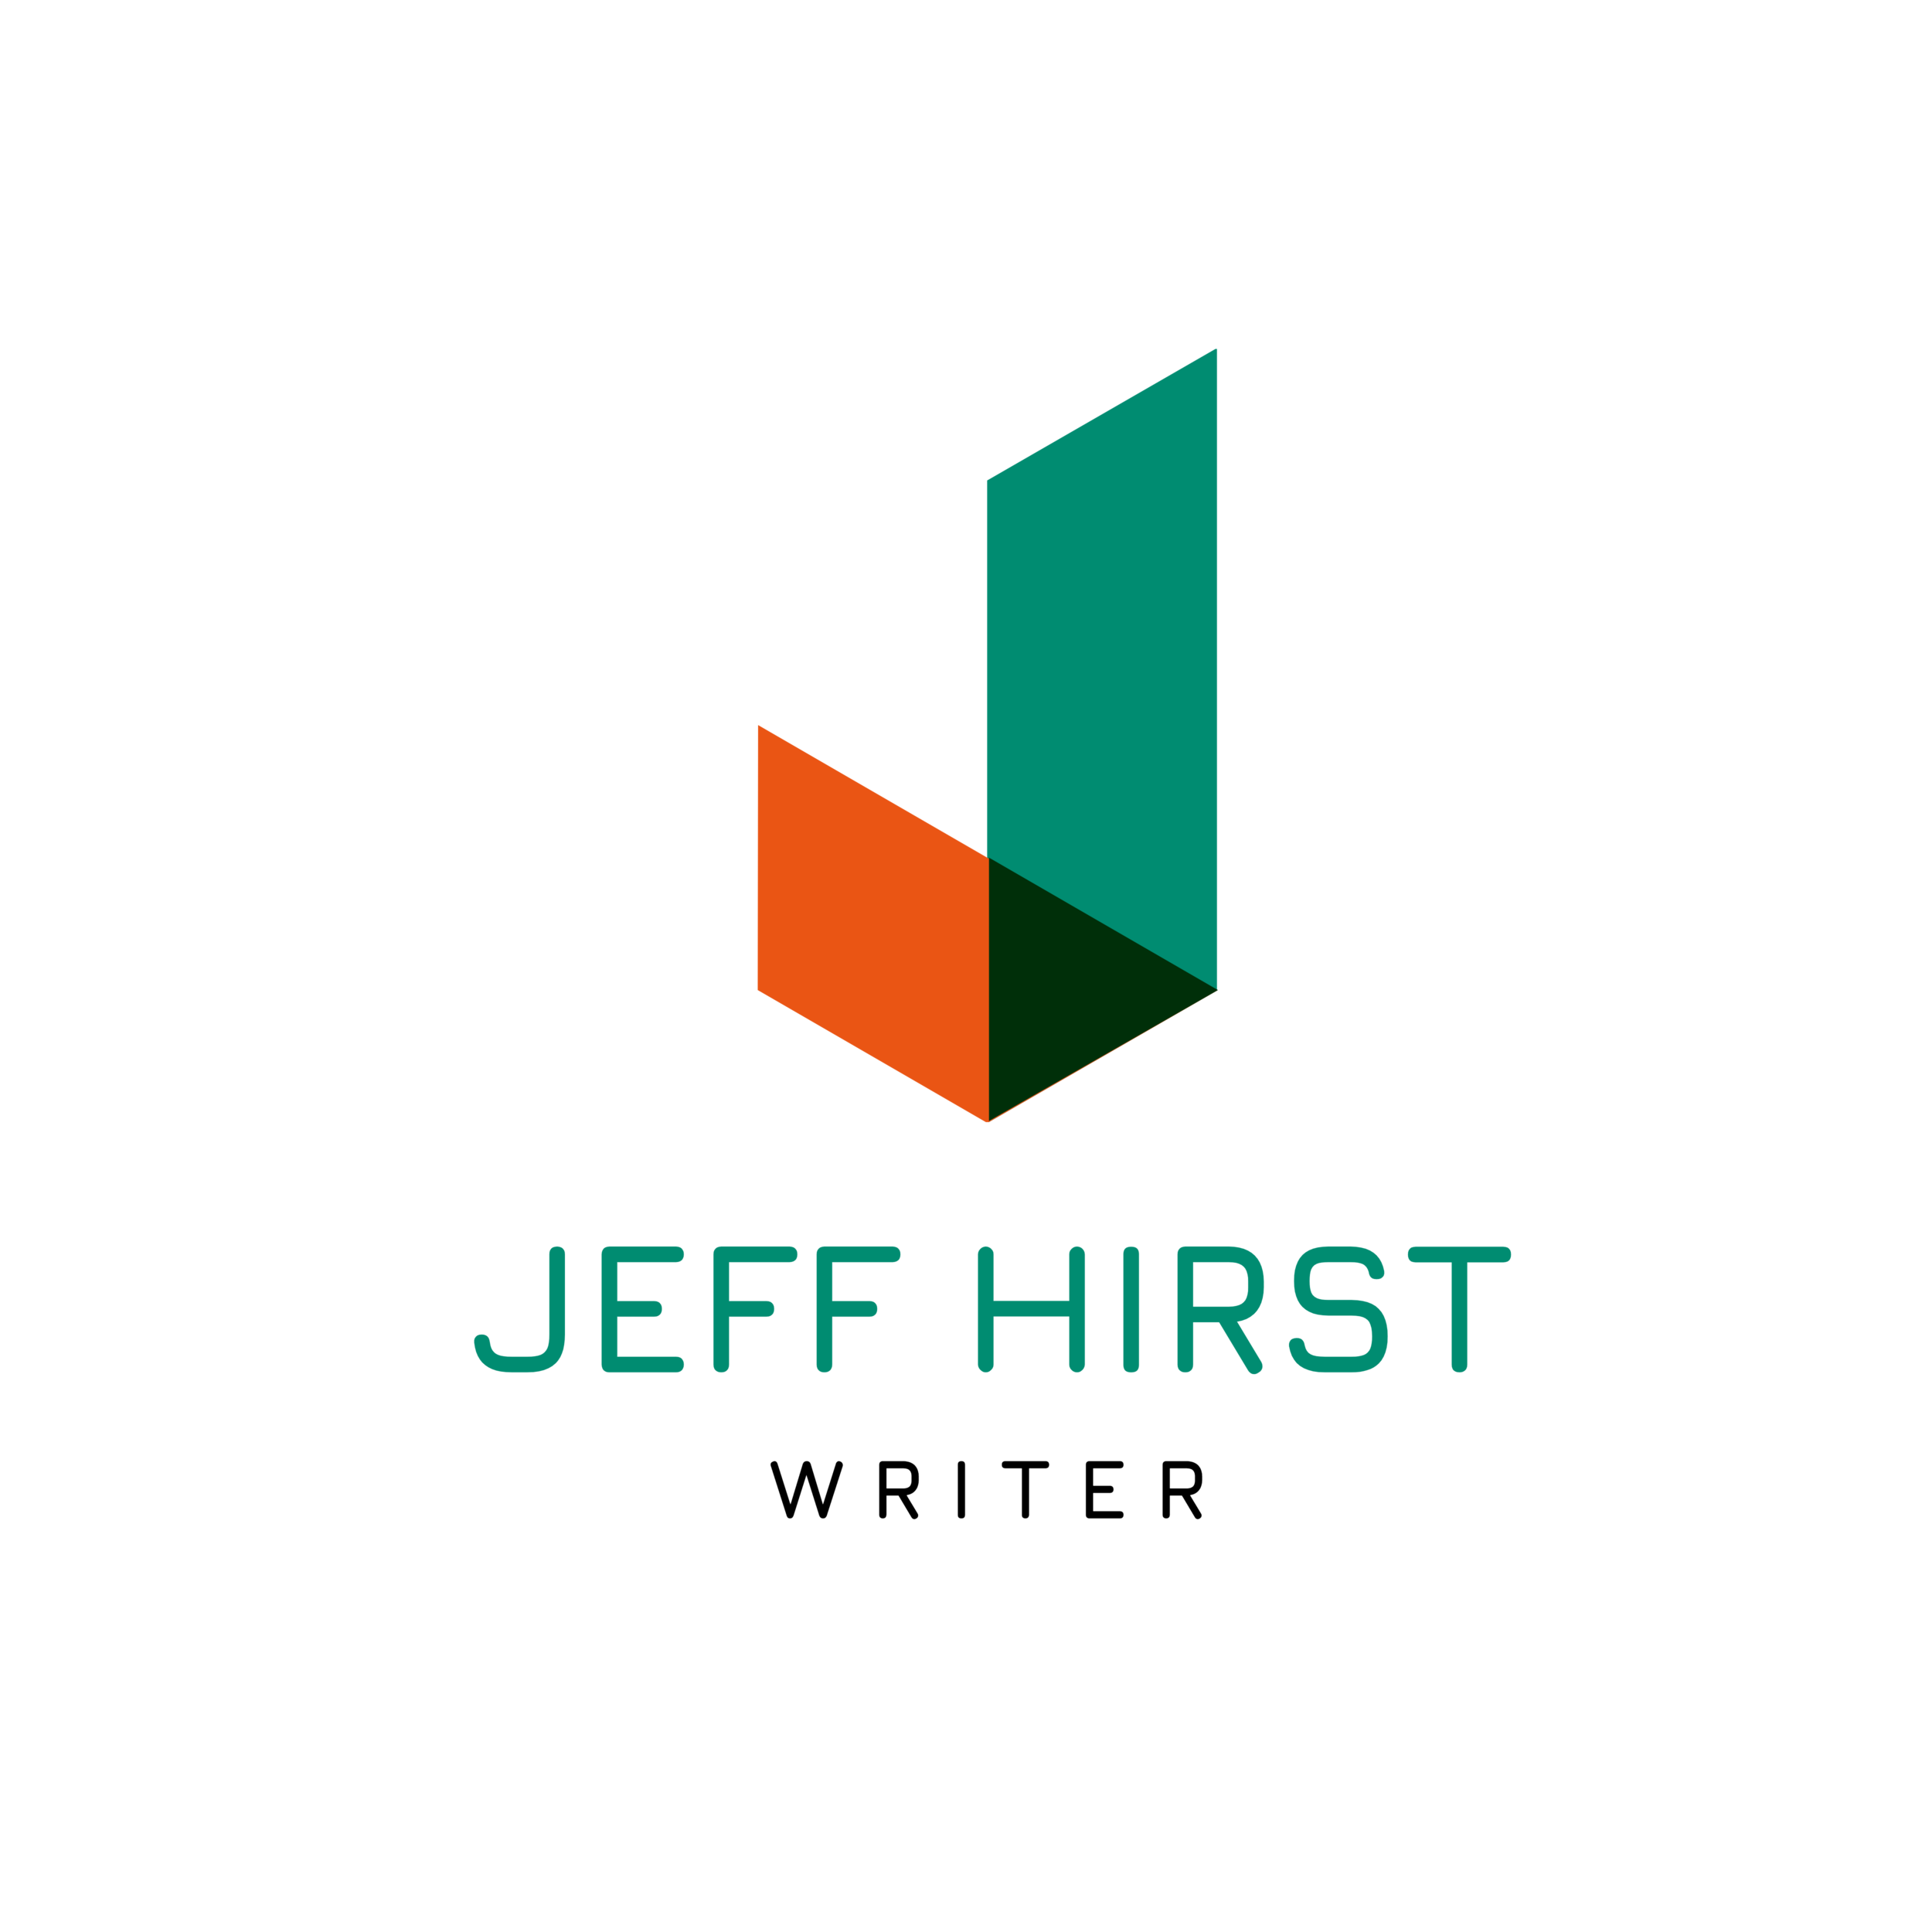 Jeff Hirst